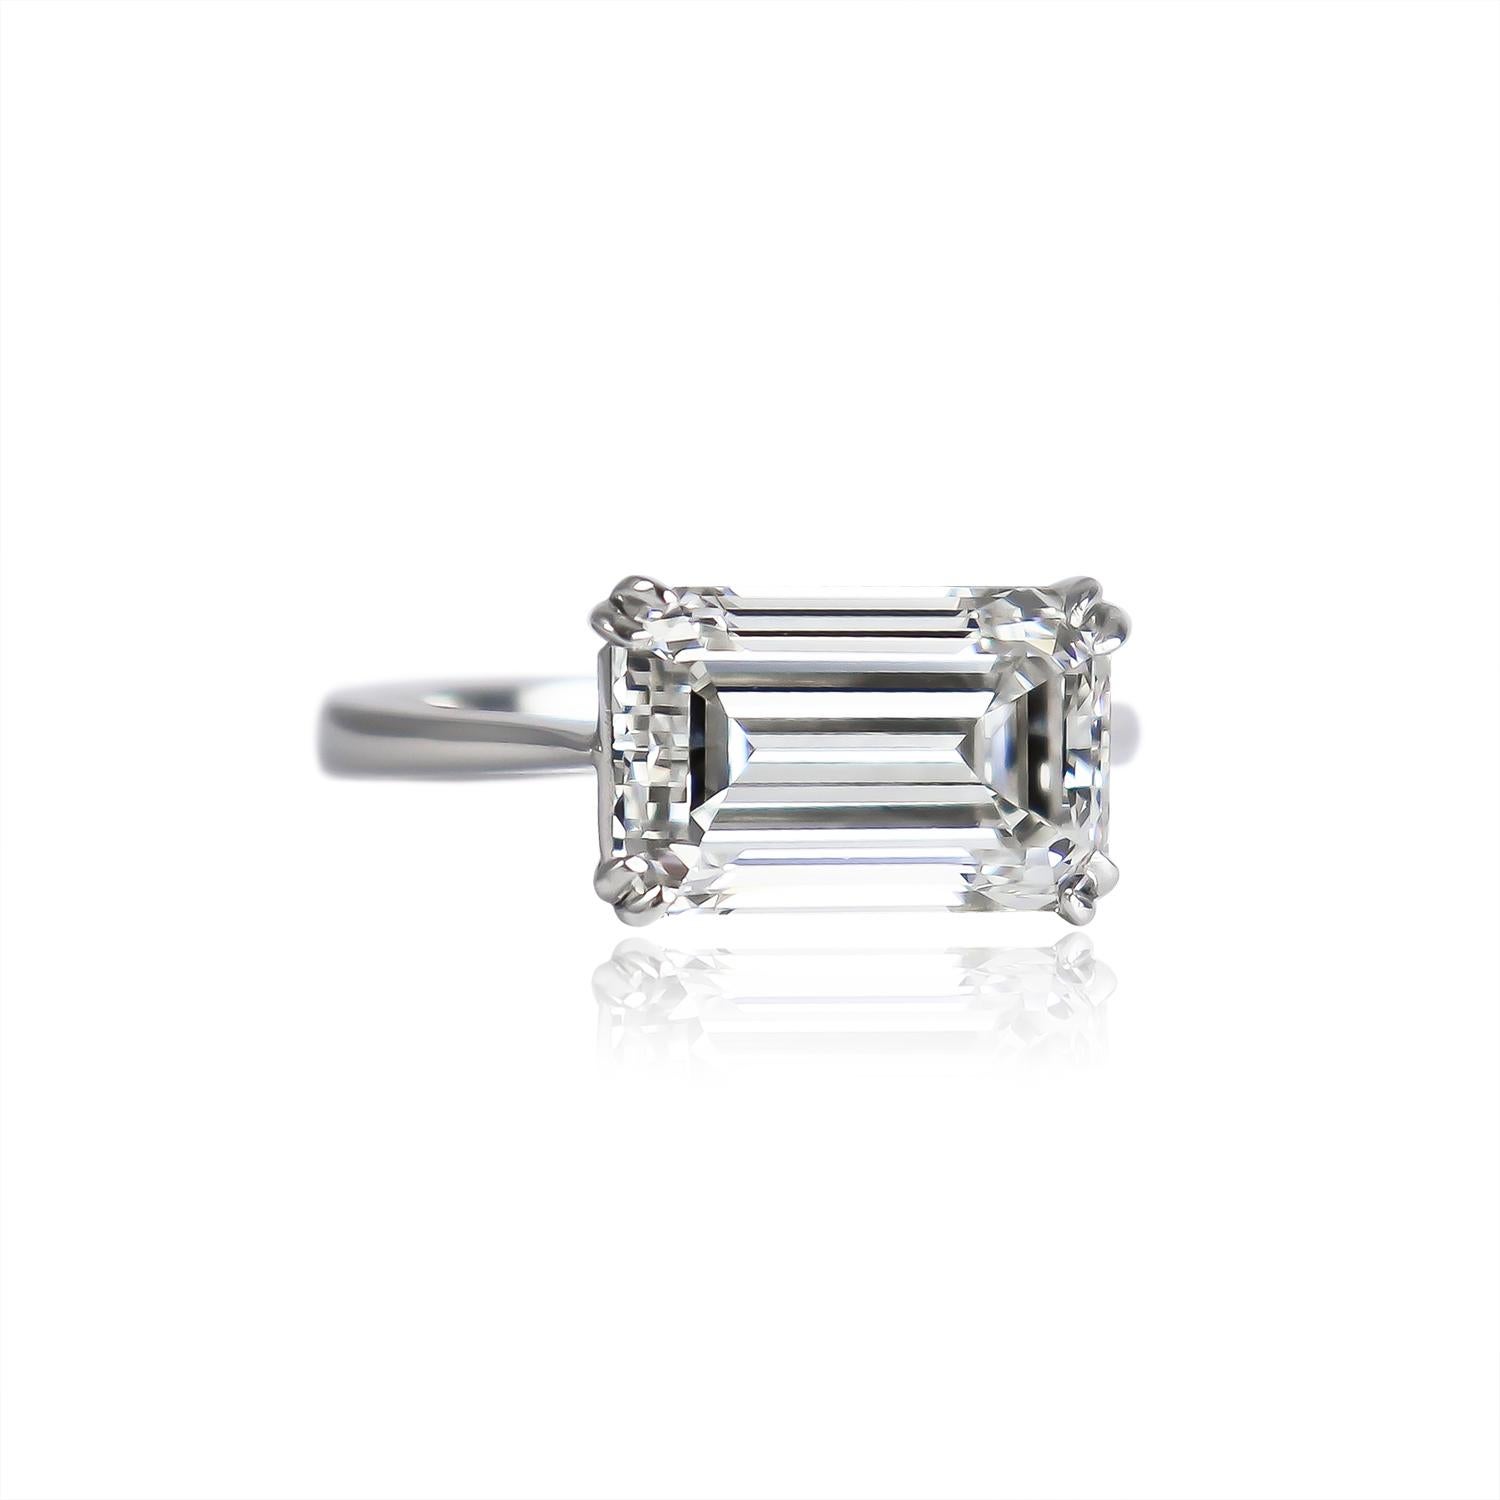 Contemporary J. Birnbach GIA Certified 5.01 Carat F SI1 Emerald Cut Diamond Solitaire Ring